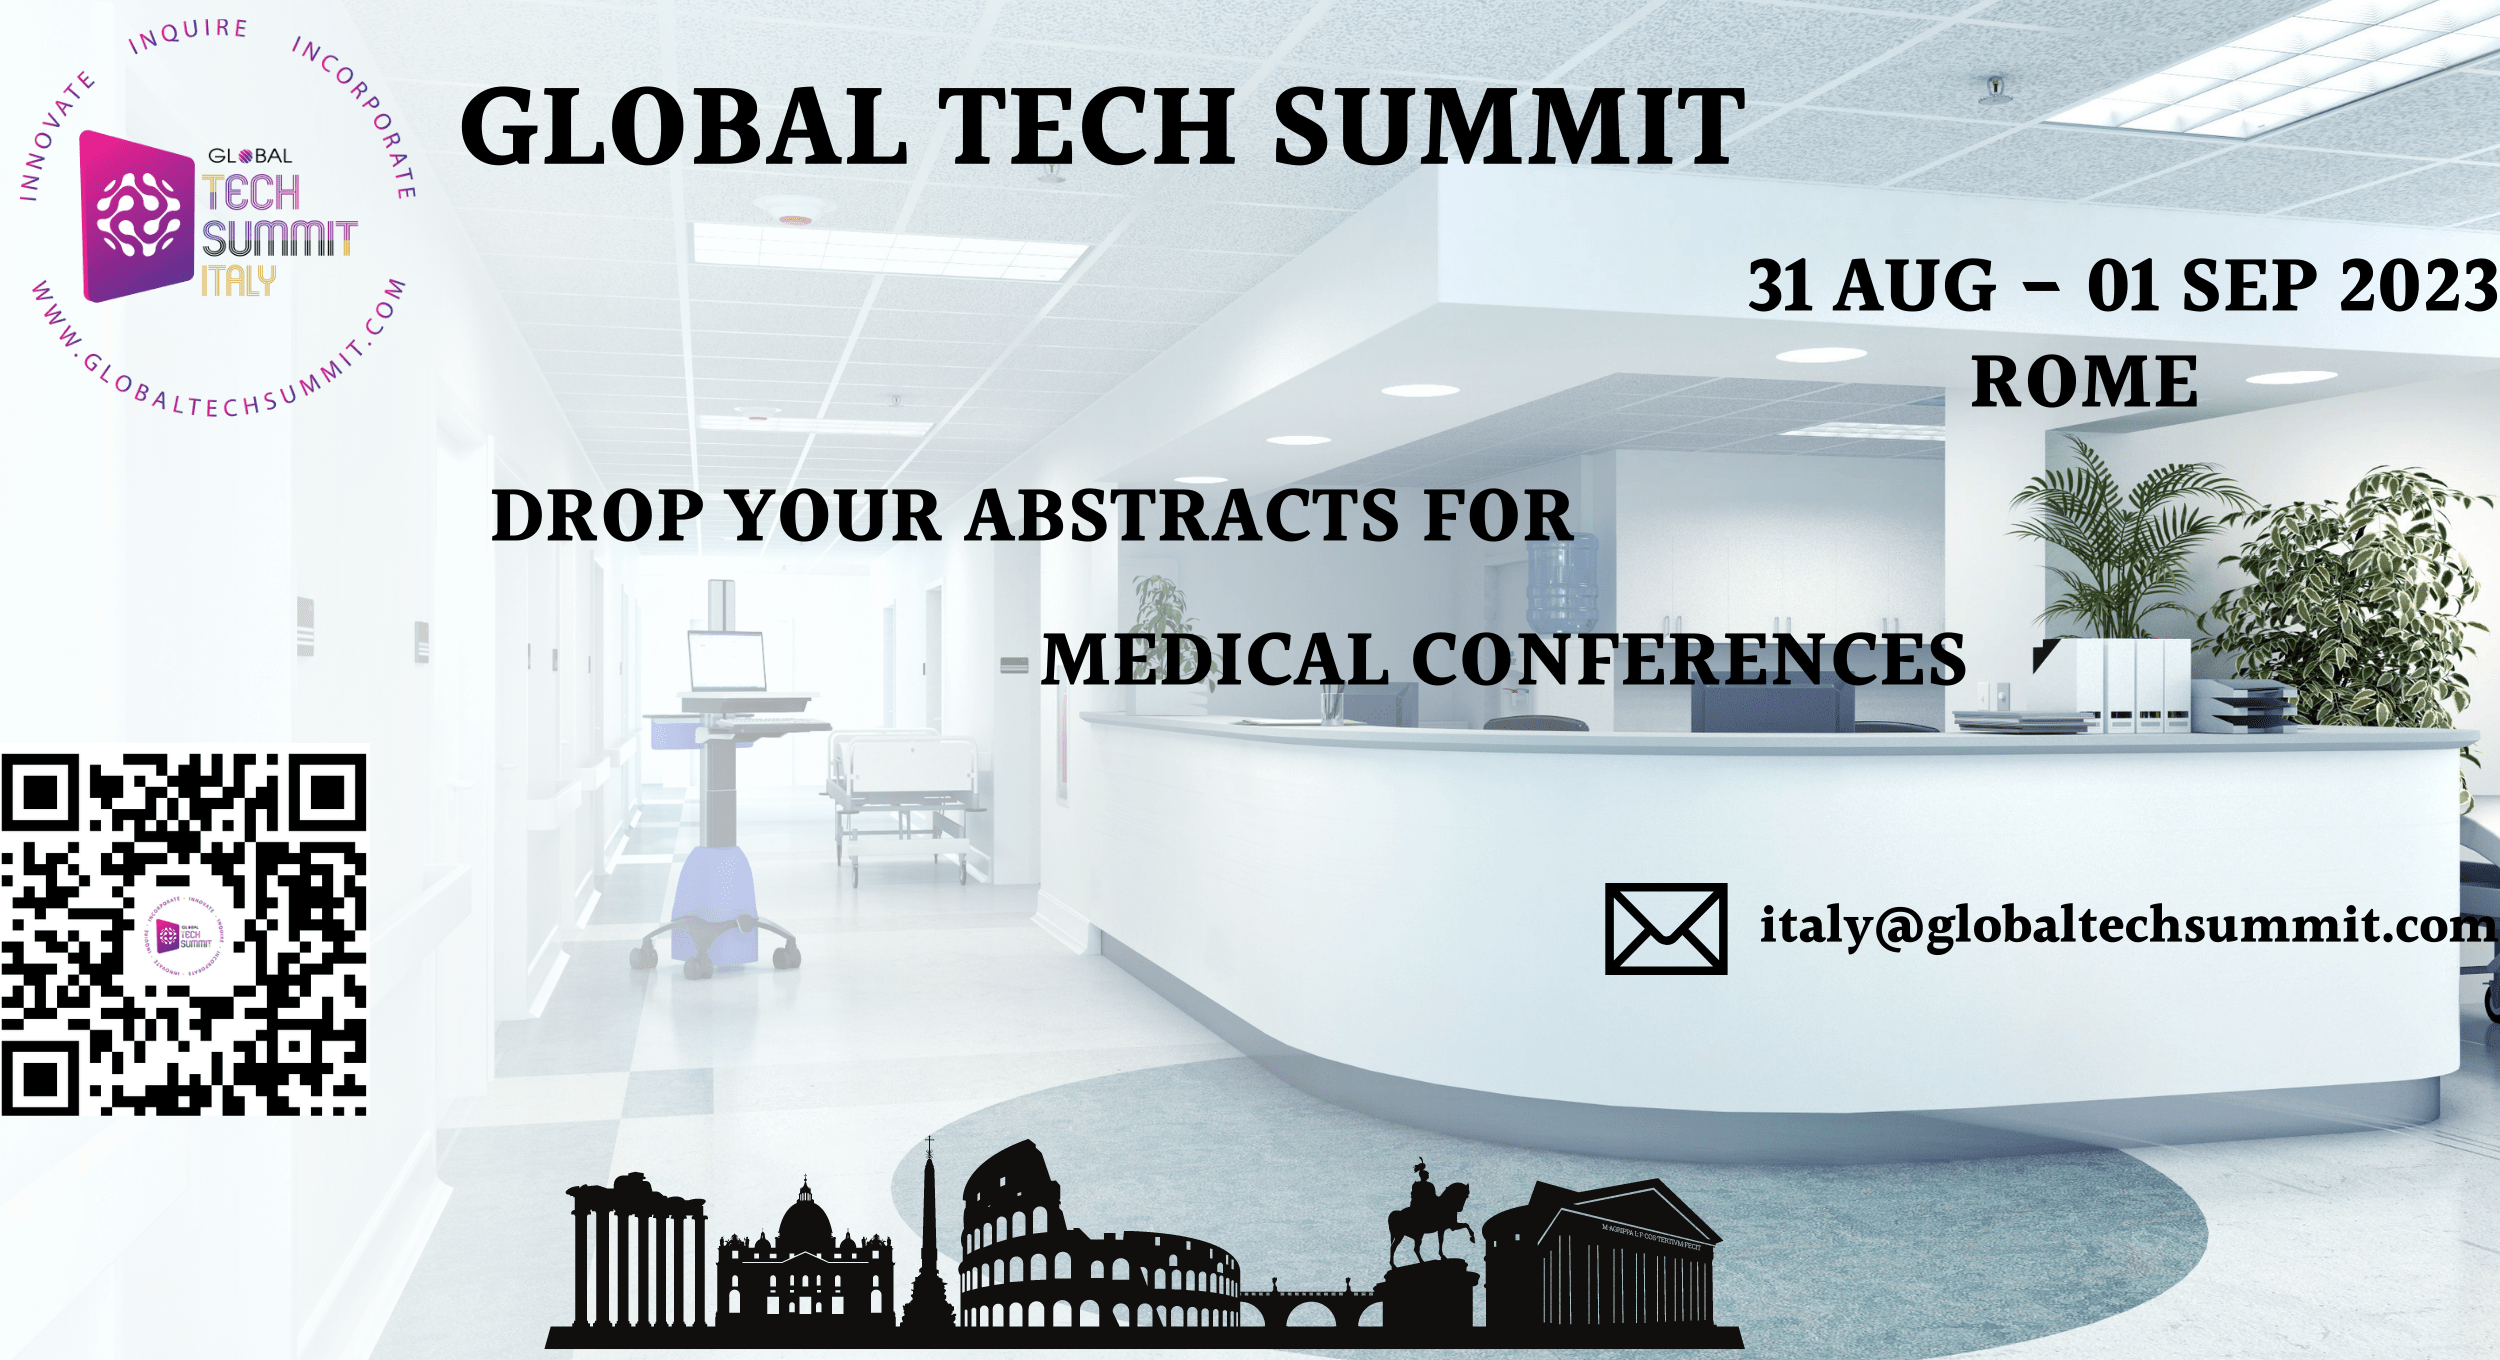 Global Tech Summit - Rome: 